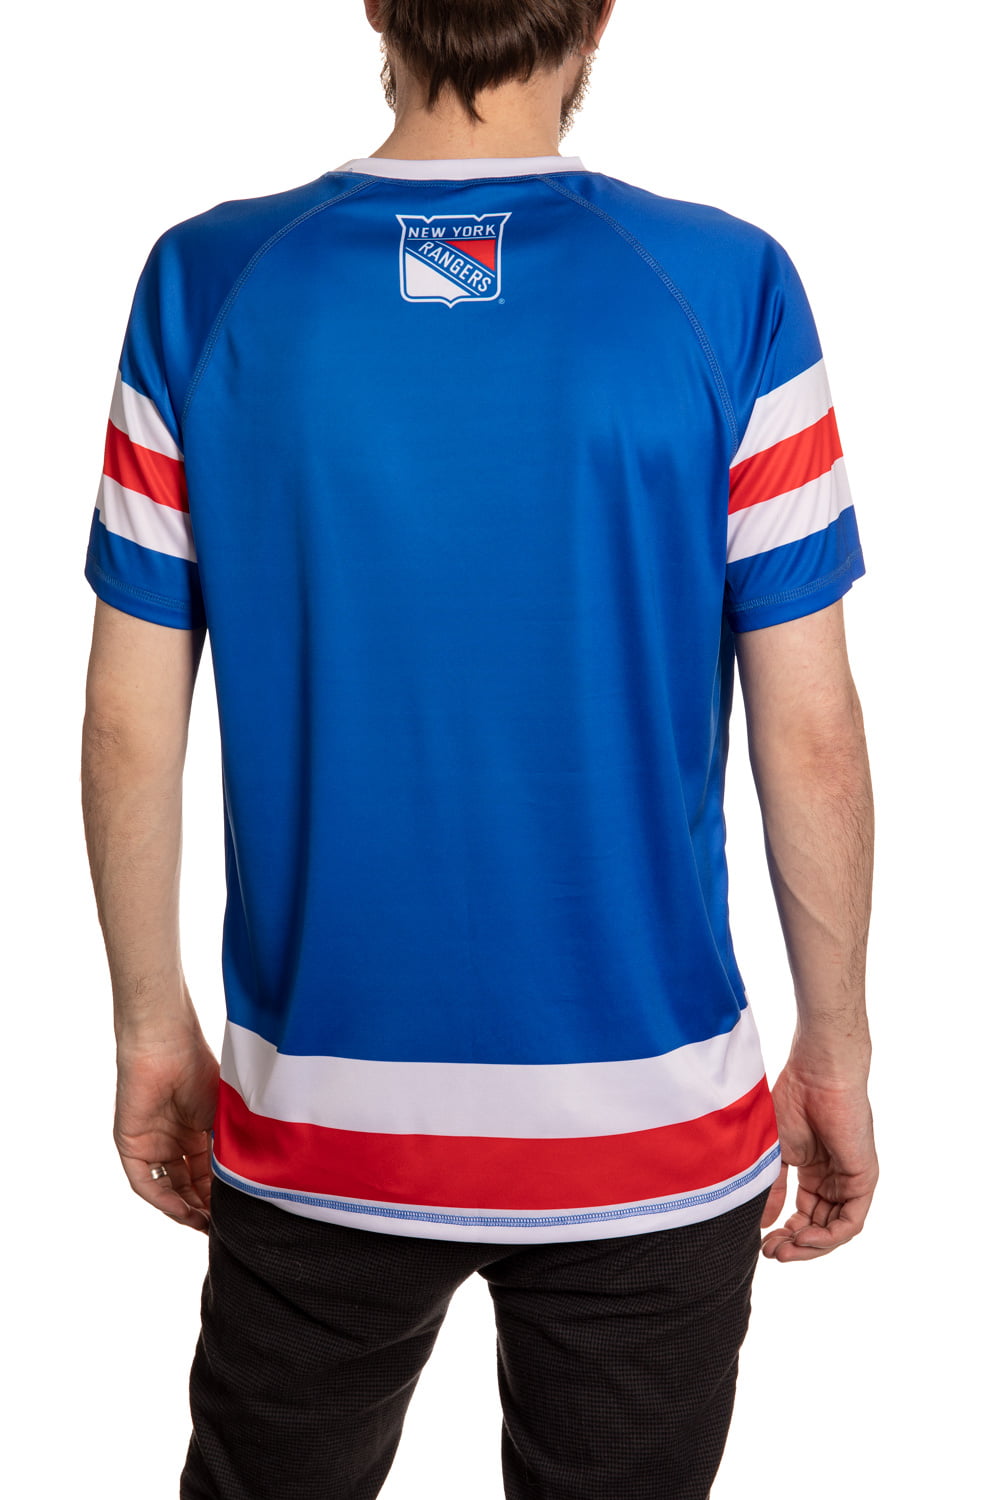 New York Rangers Short Sleeve Rashguard Back View. New York Rangers Logo Printed on Back of Collar.